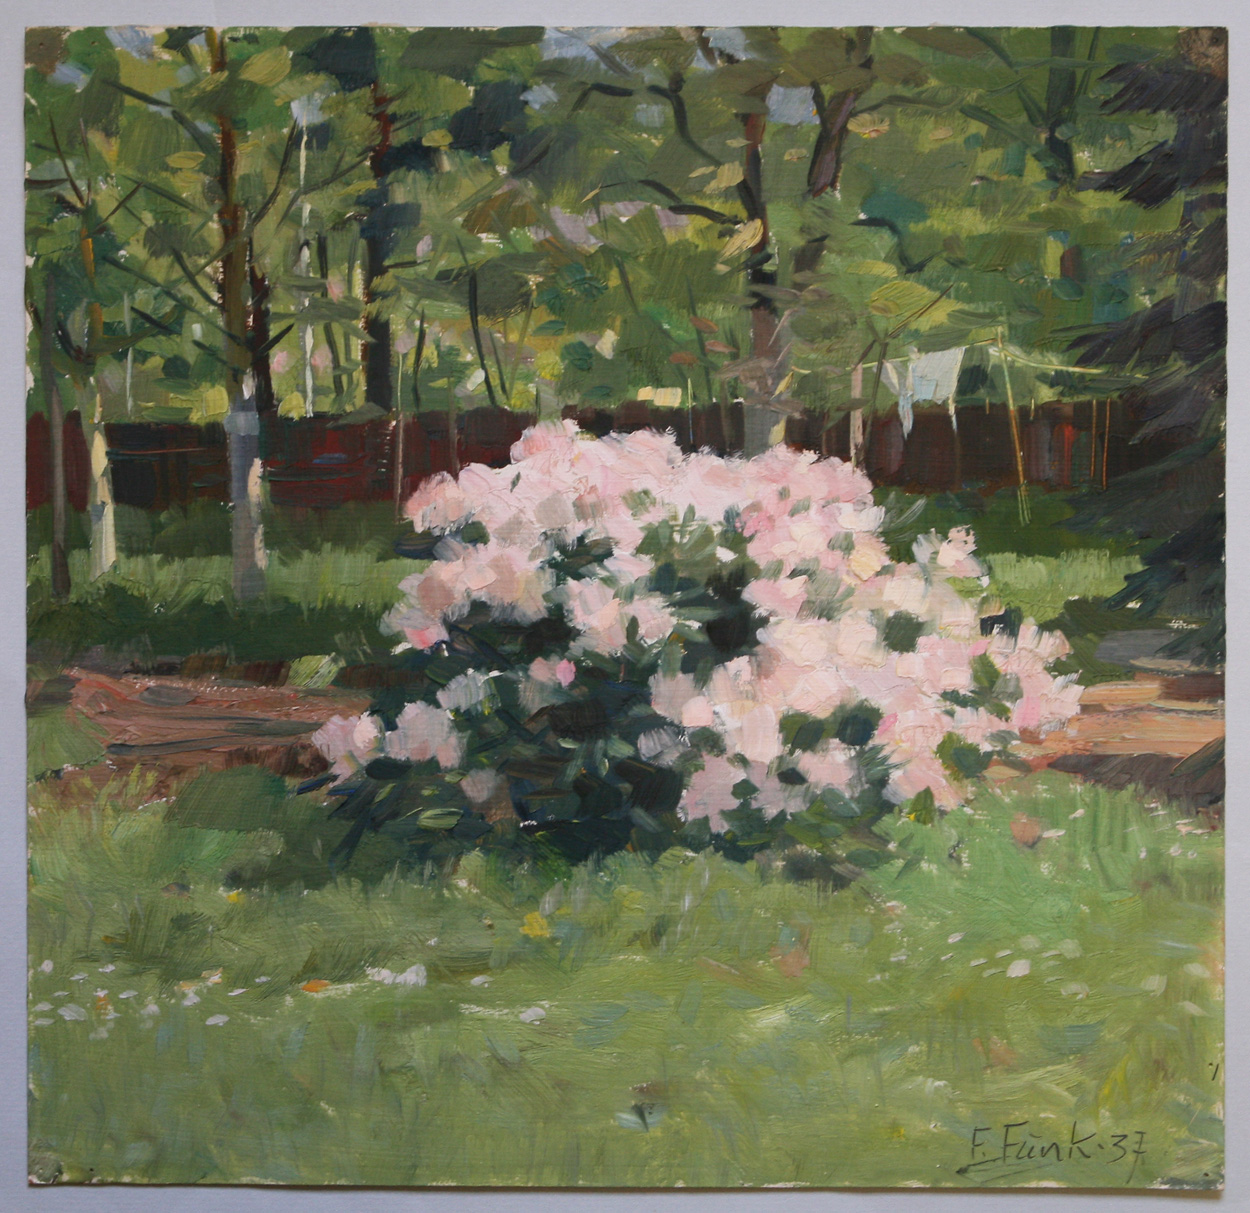 Felix Funk, Rhododendron